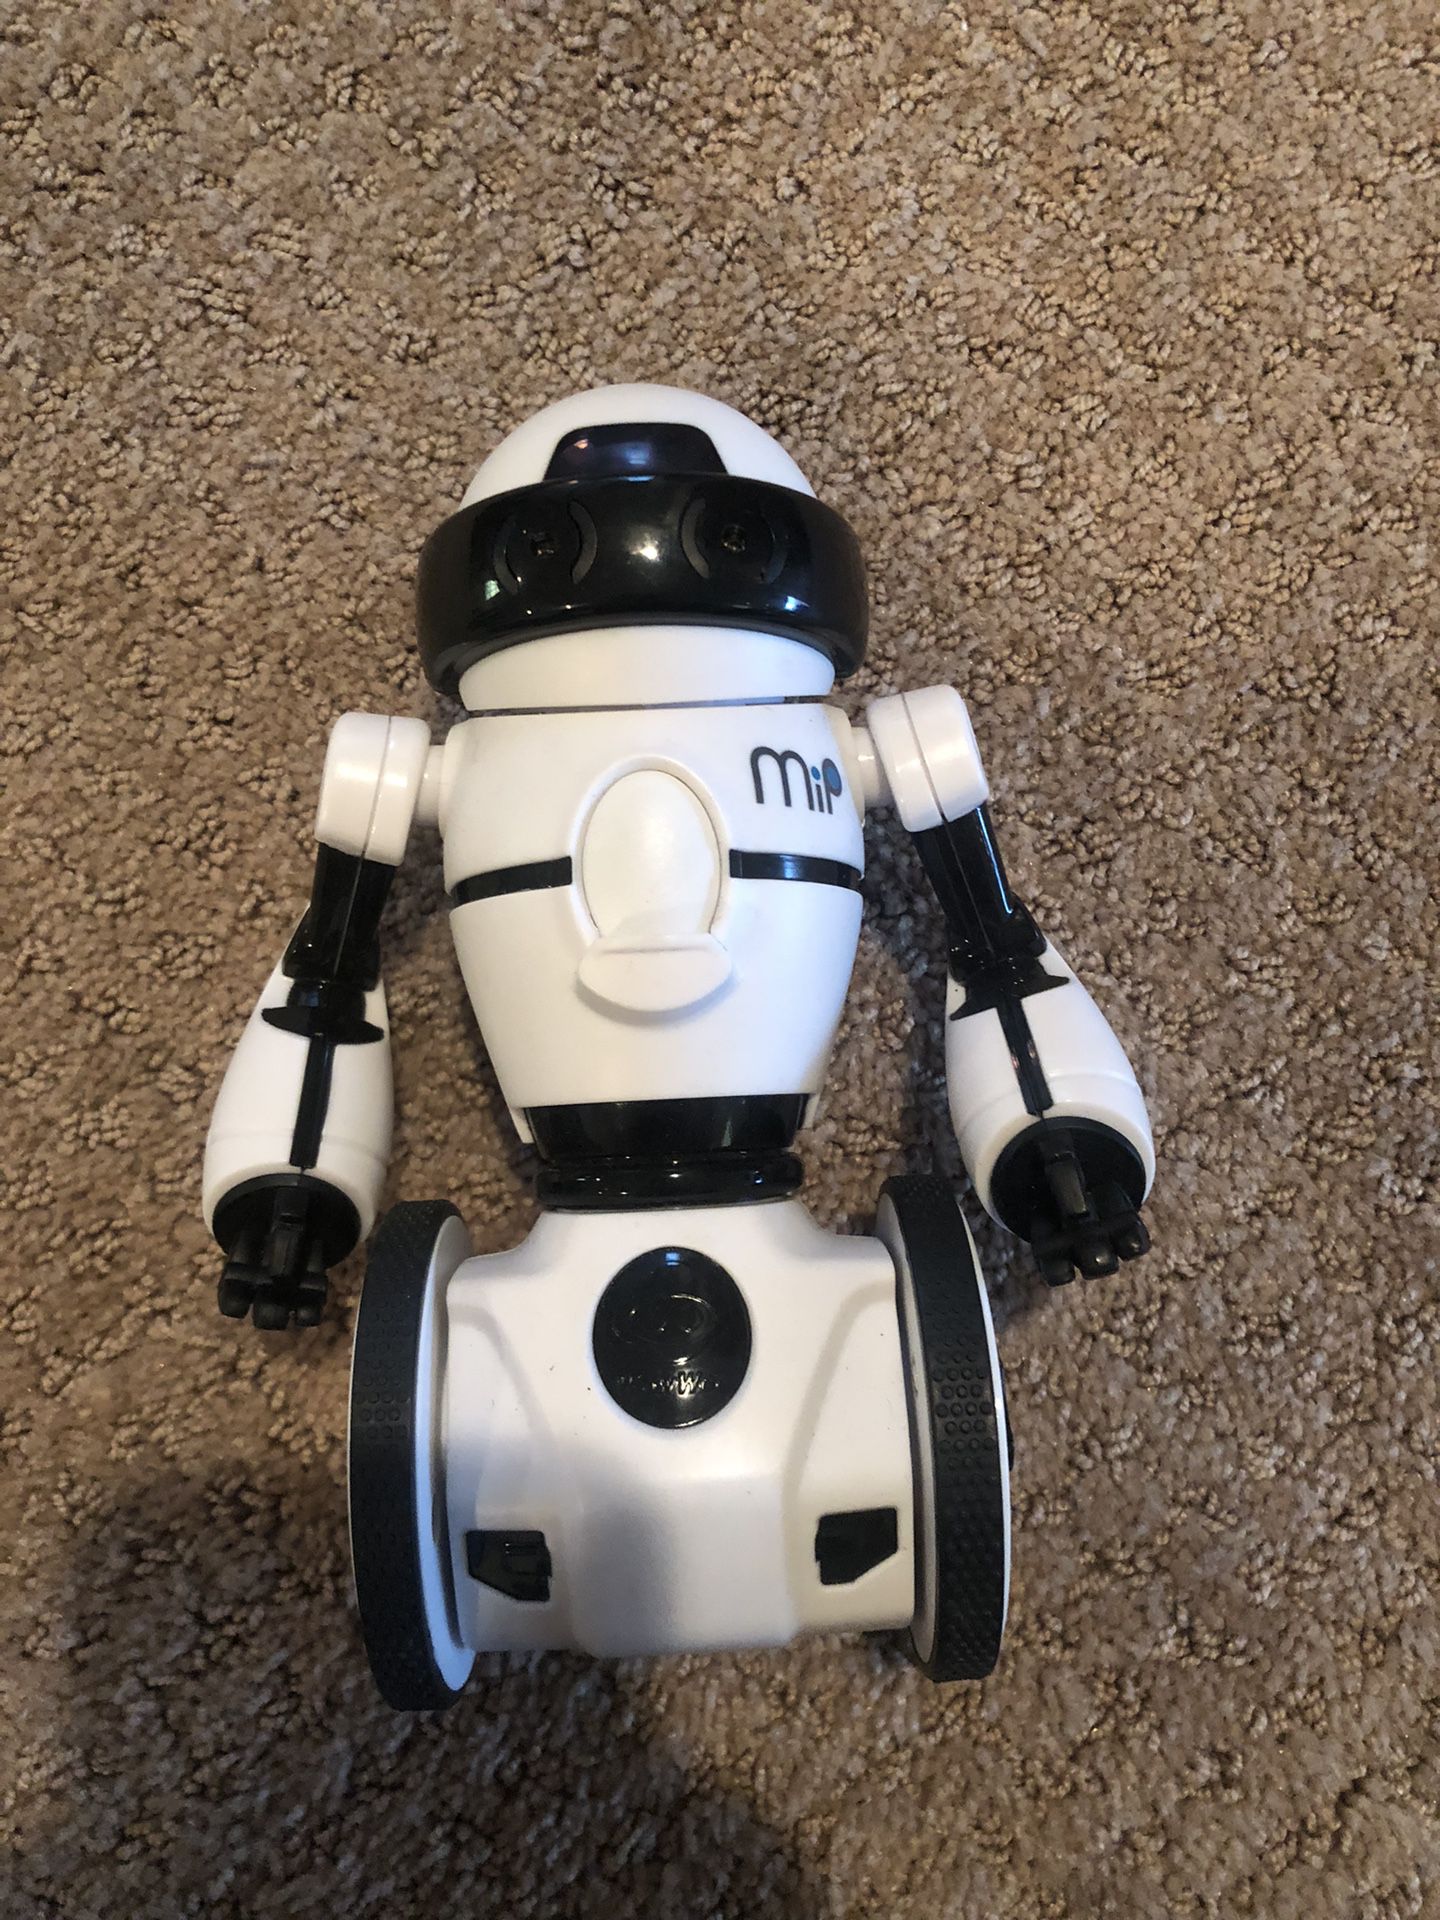 Mip Robot 